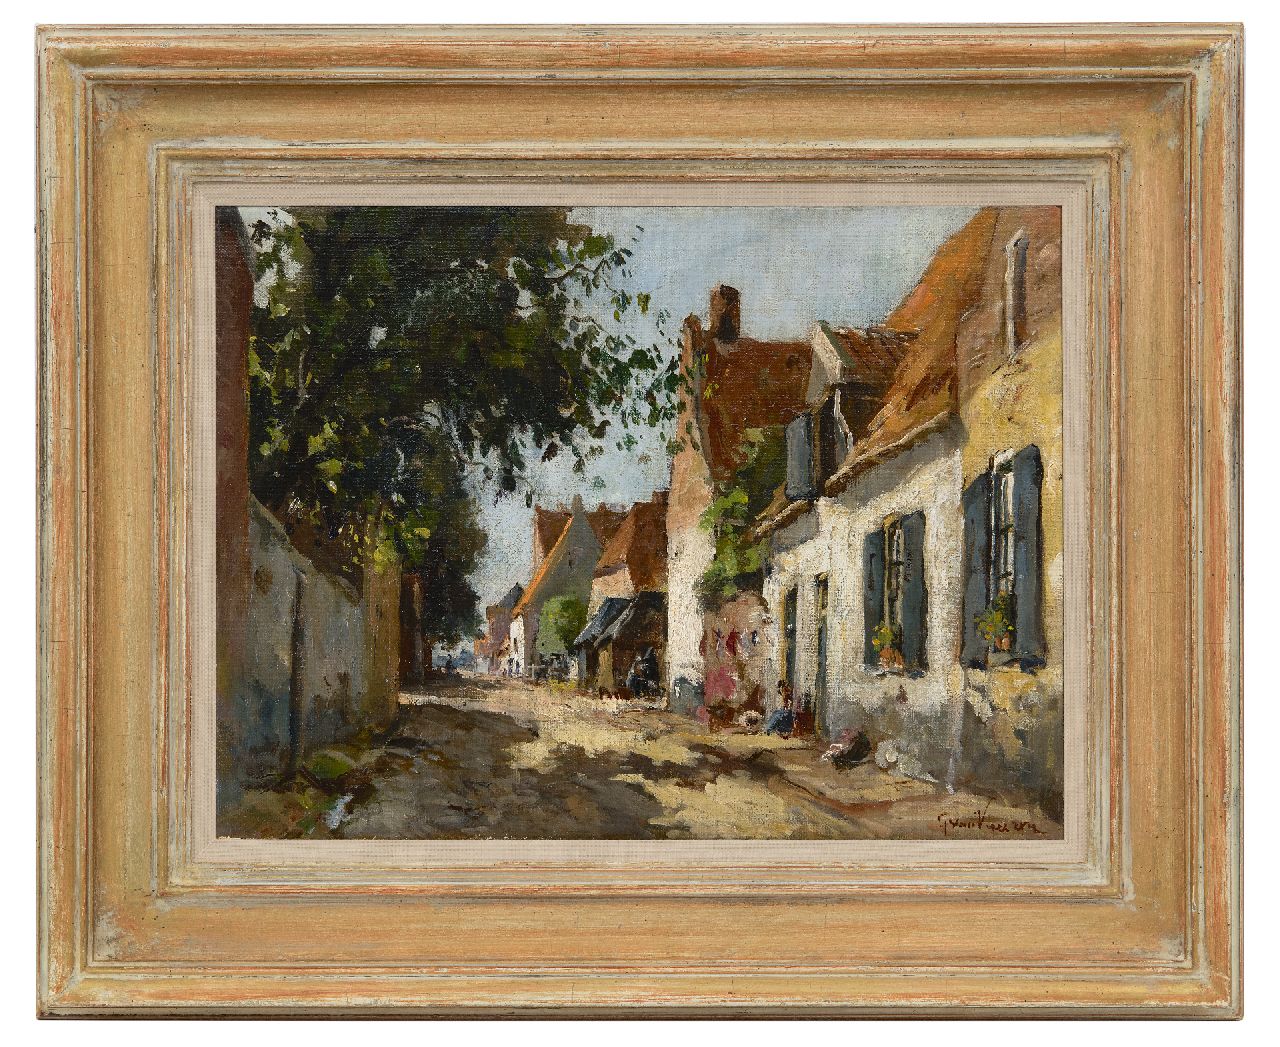 Vuuren J. van | Jan van Vuuren | Paintings offered for sale | A sunny street in Elburg, oil on canvas 30.0 x 39.8 cm, signed l.r.